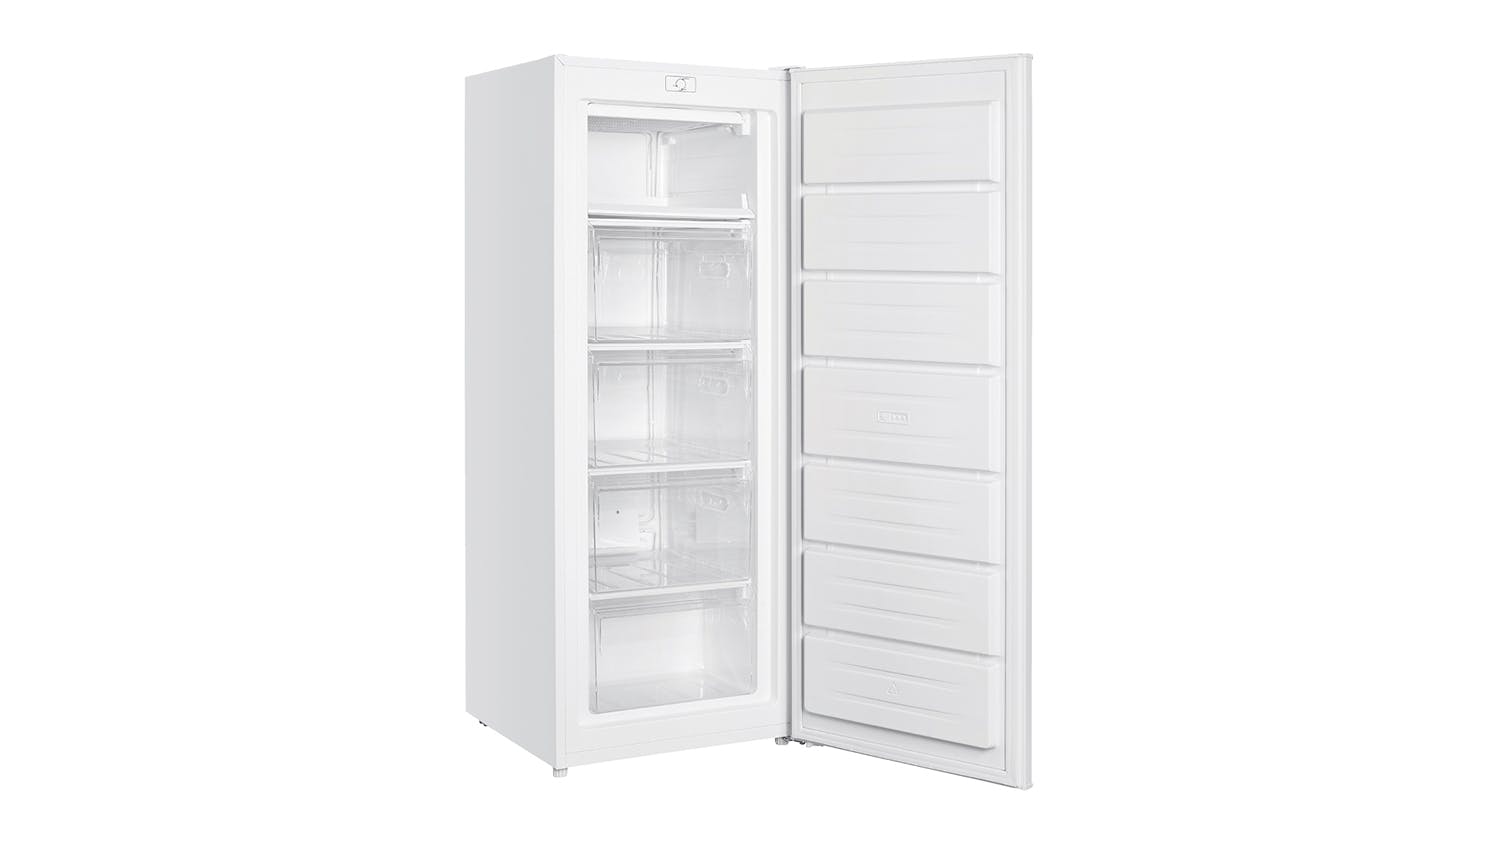 Haier 168L Single Door Vertical Right Hand Freezer - White